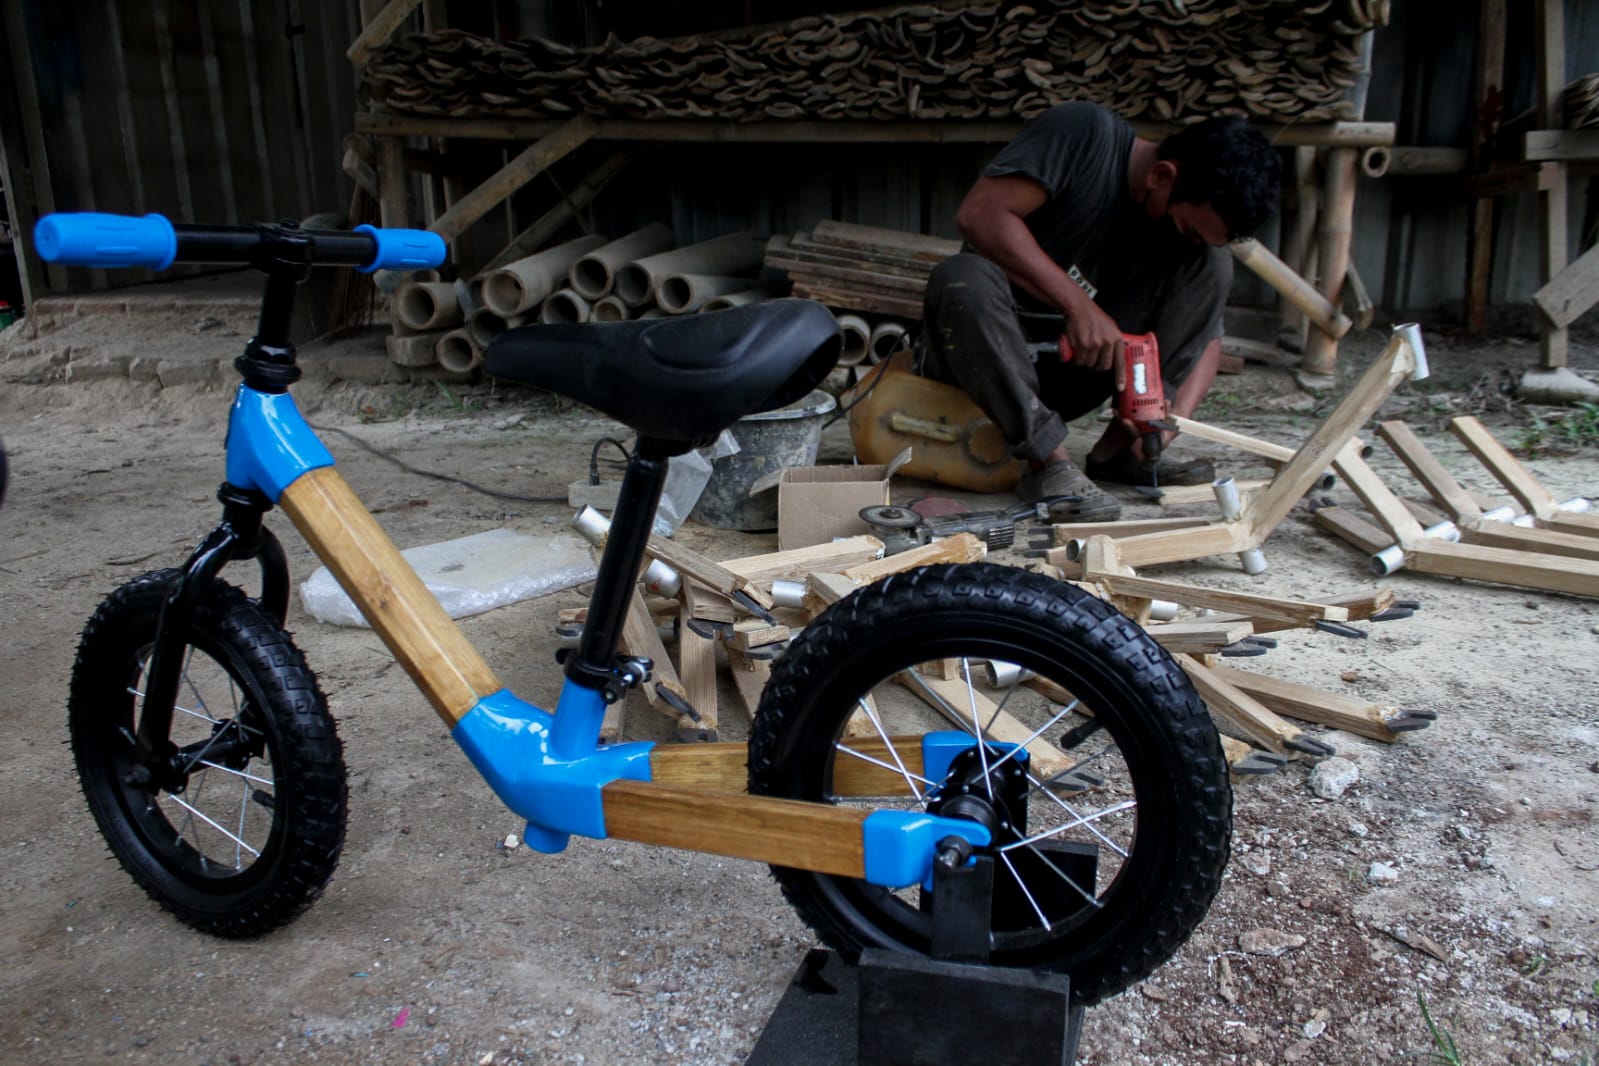 Inovasi Sepeda Bambu Arana Bike, Keunikan Bersepeda untuk Semua Usia